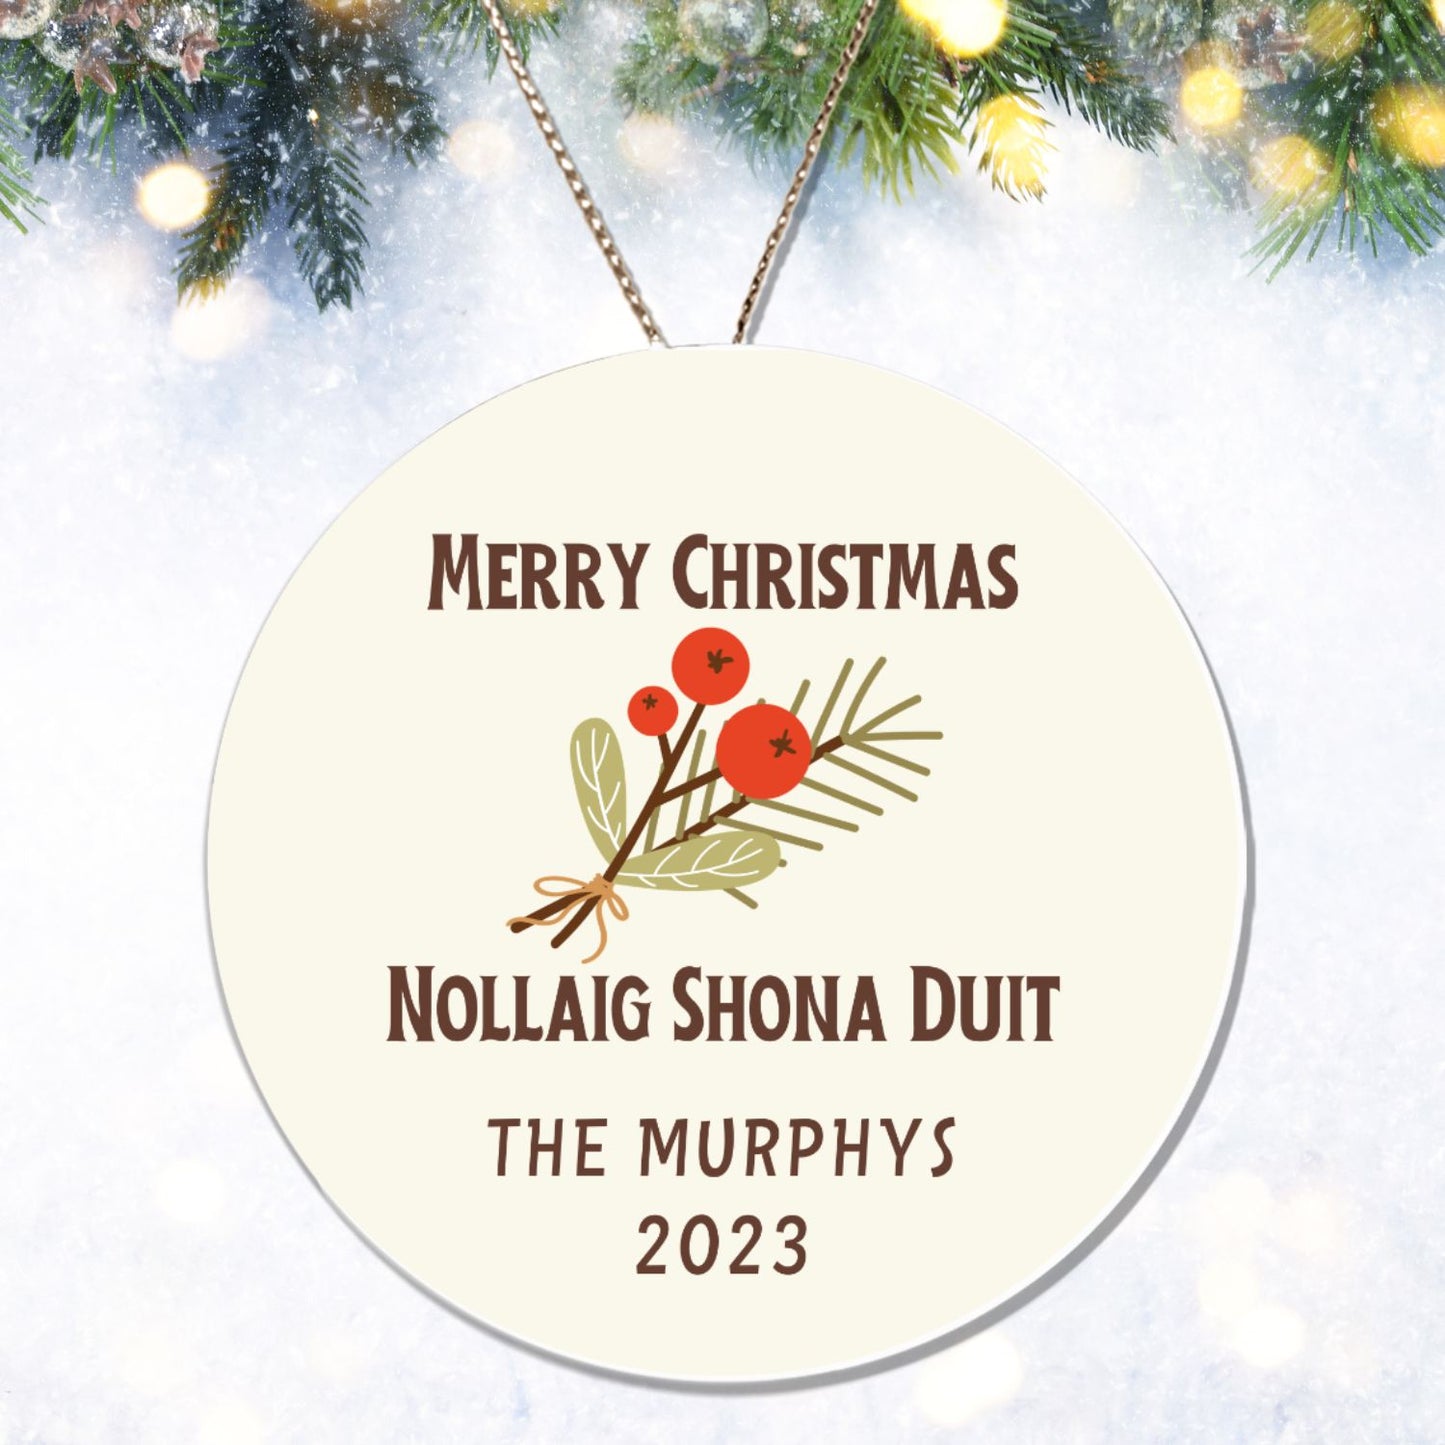 Personalized Irish Gaelic Christmas Ornament